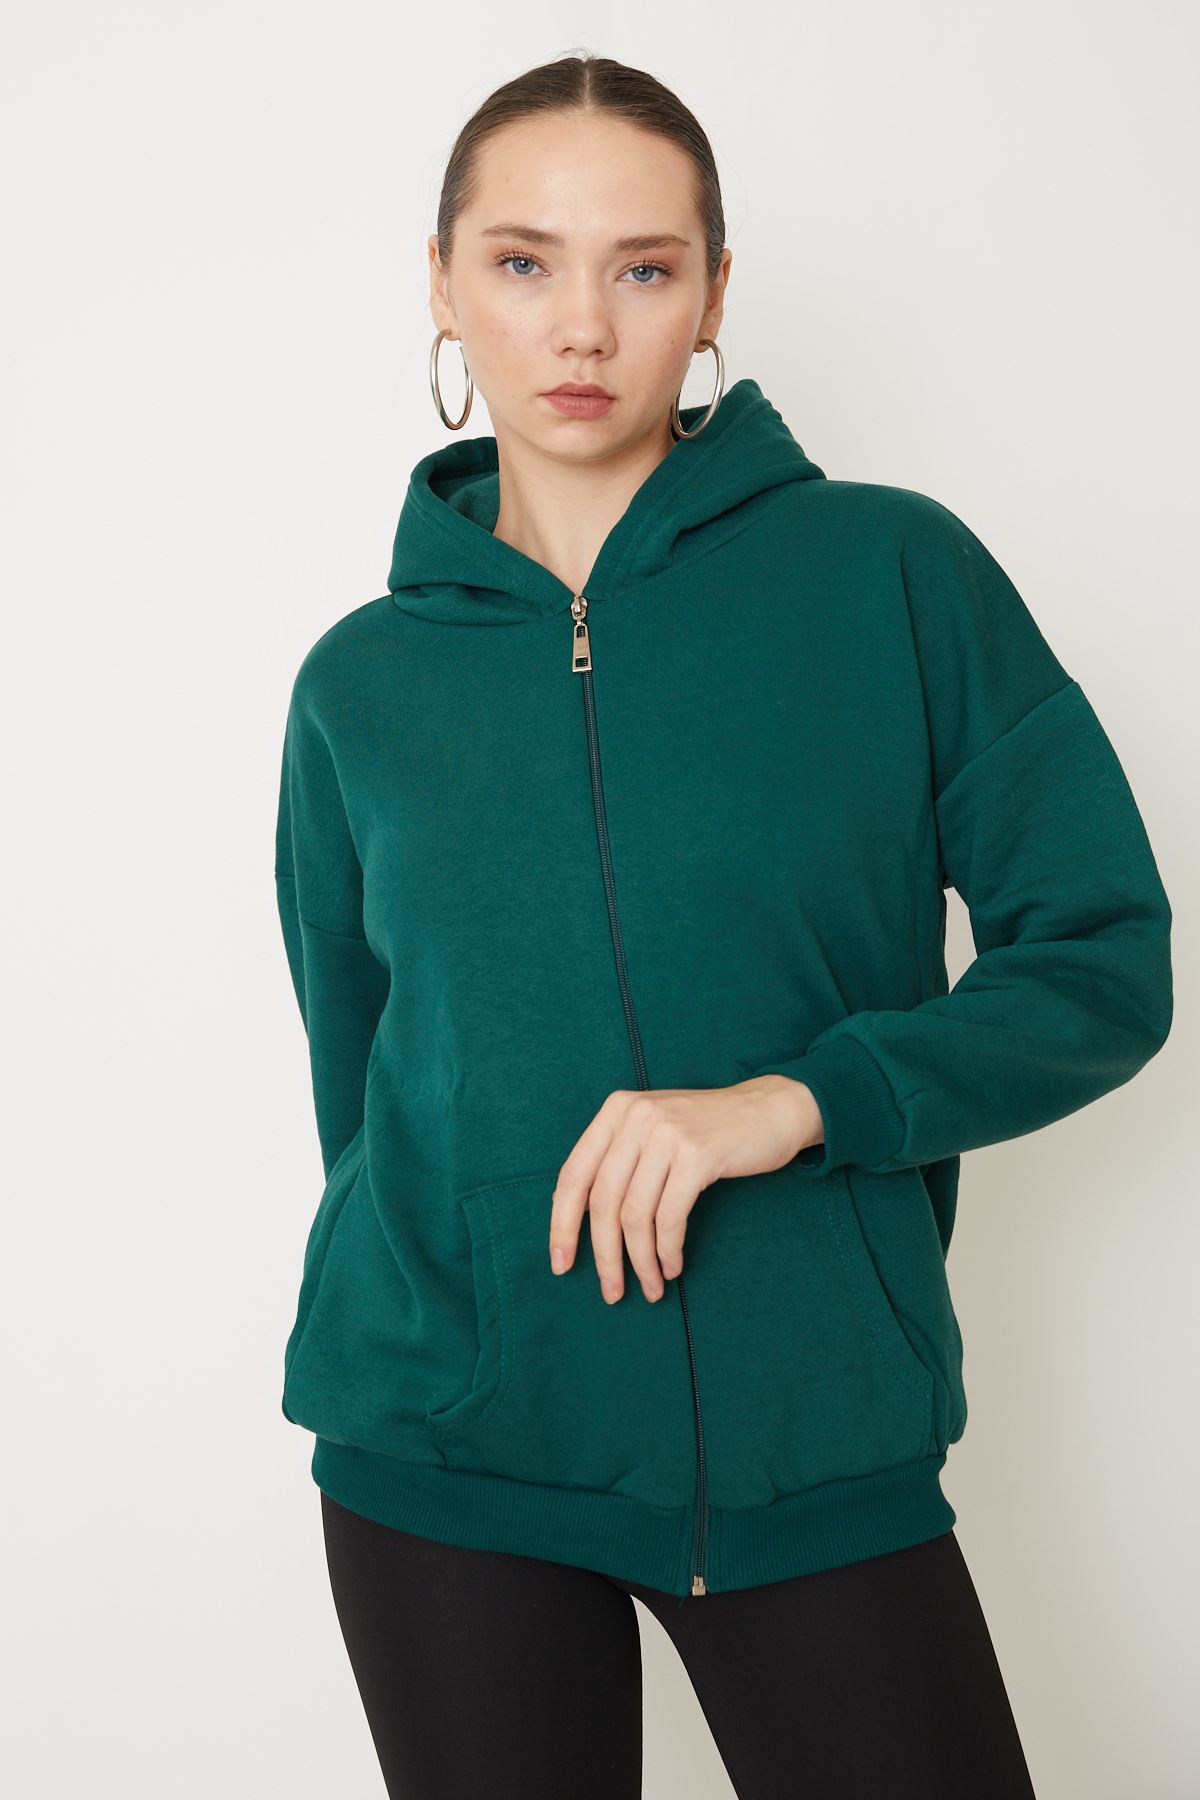 Fermuarlı Sweatshirt-Zümrüt Yeşil